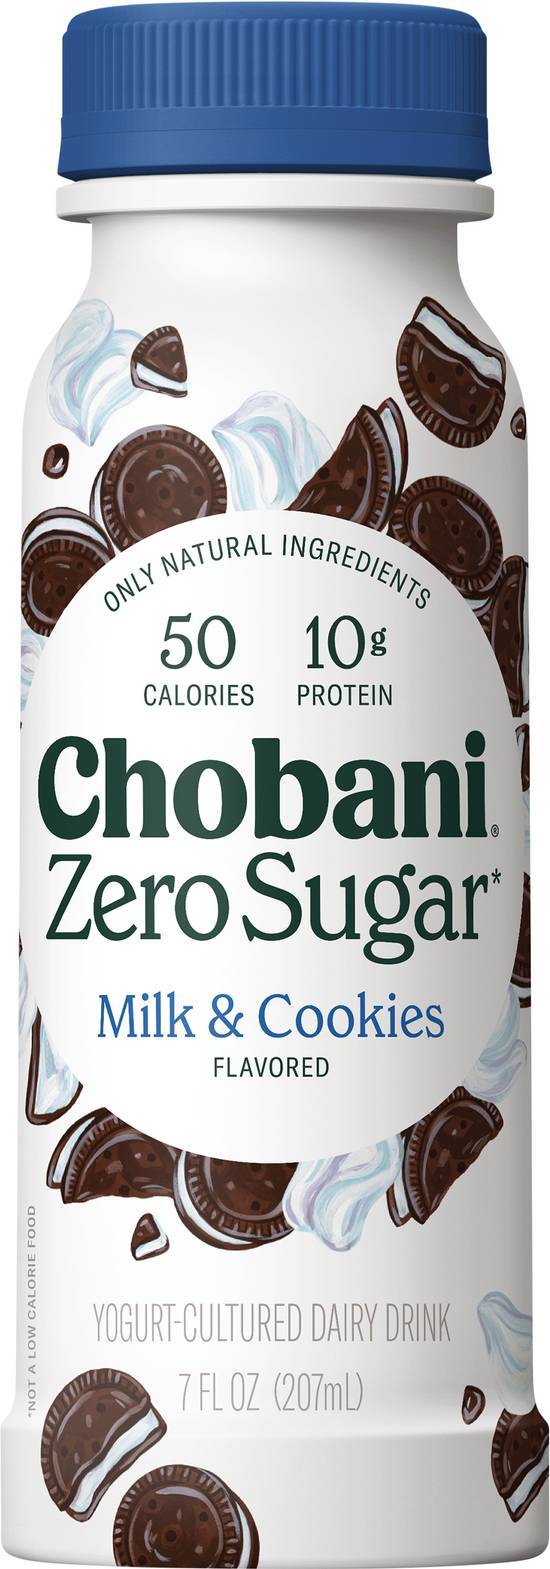 Chobani Zero Sugar Yogurt-Cultured Dairy Drink (milk-cookies)